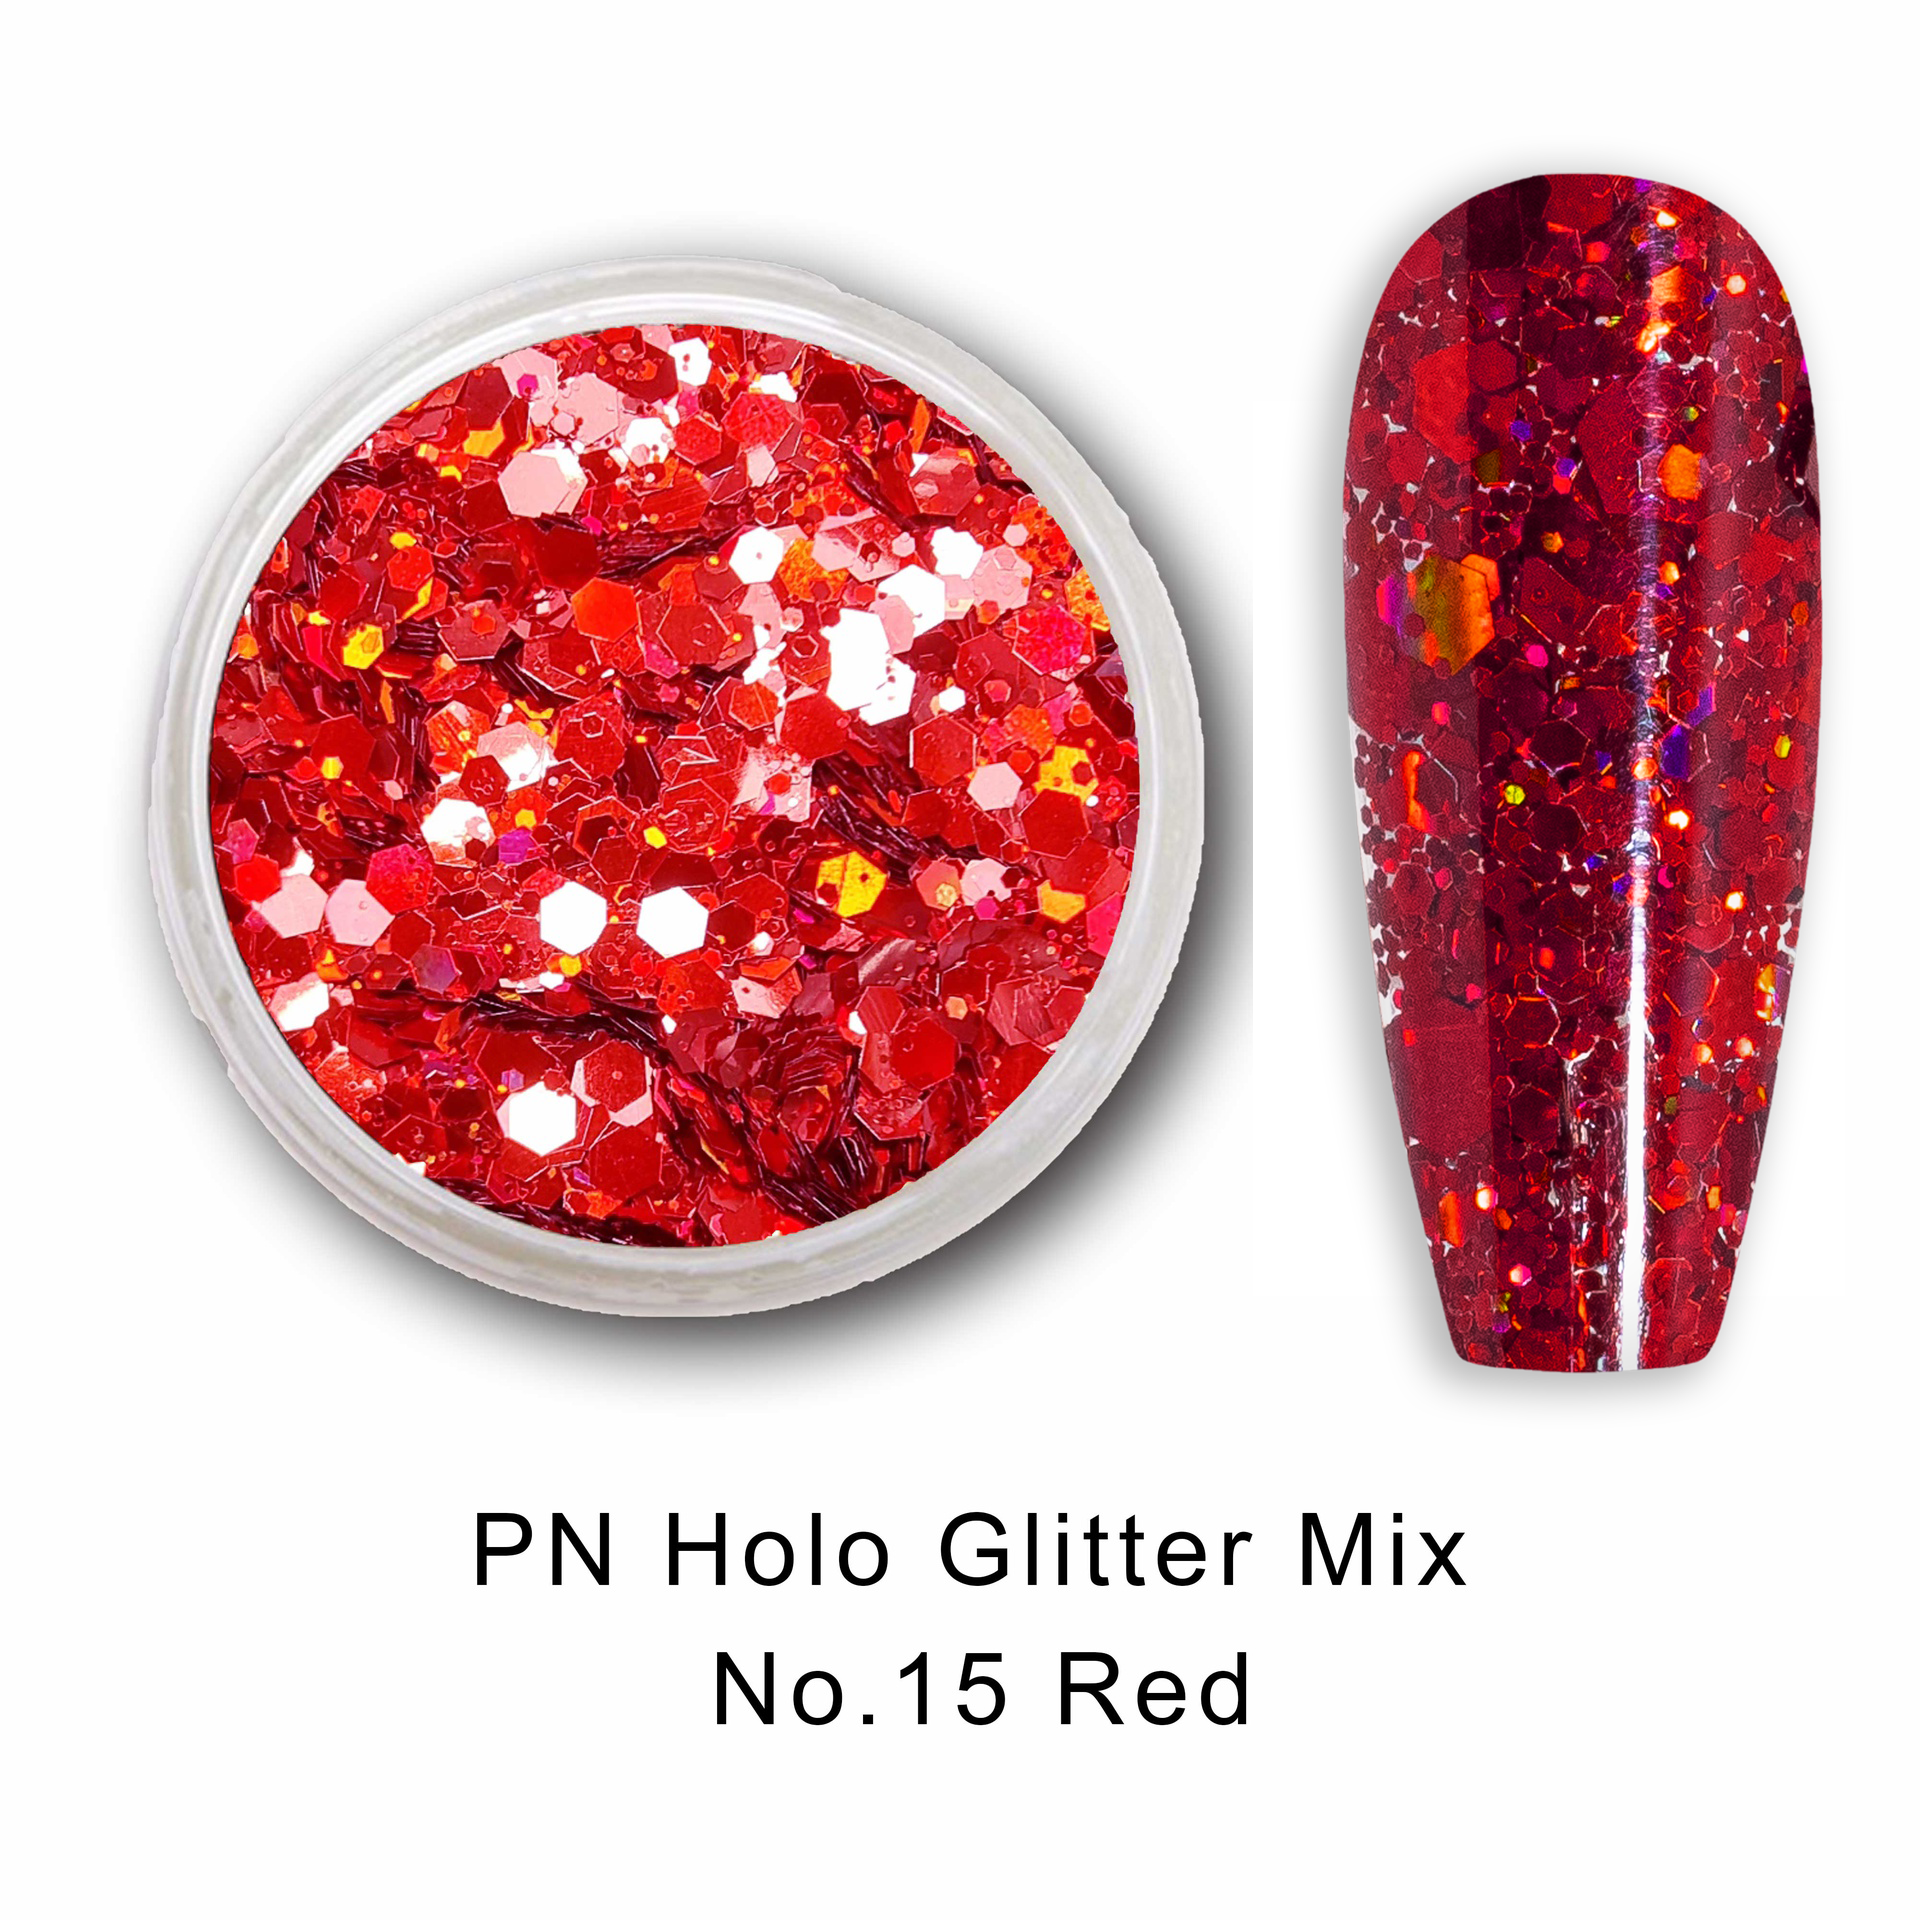 PN Holo glitter mix No.15 Red